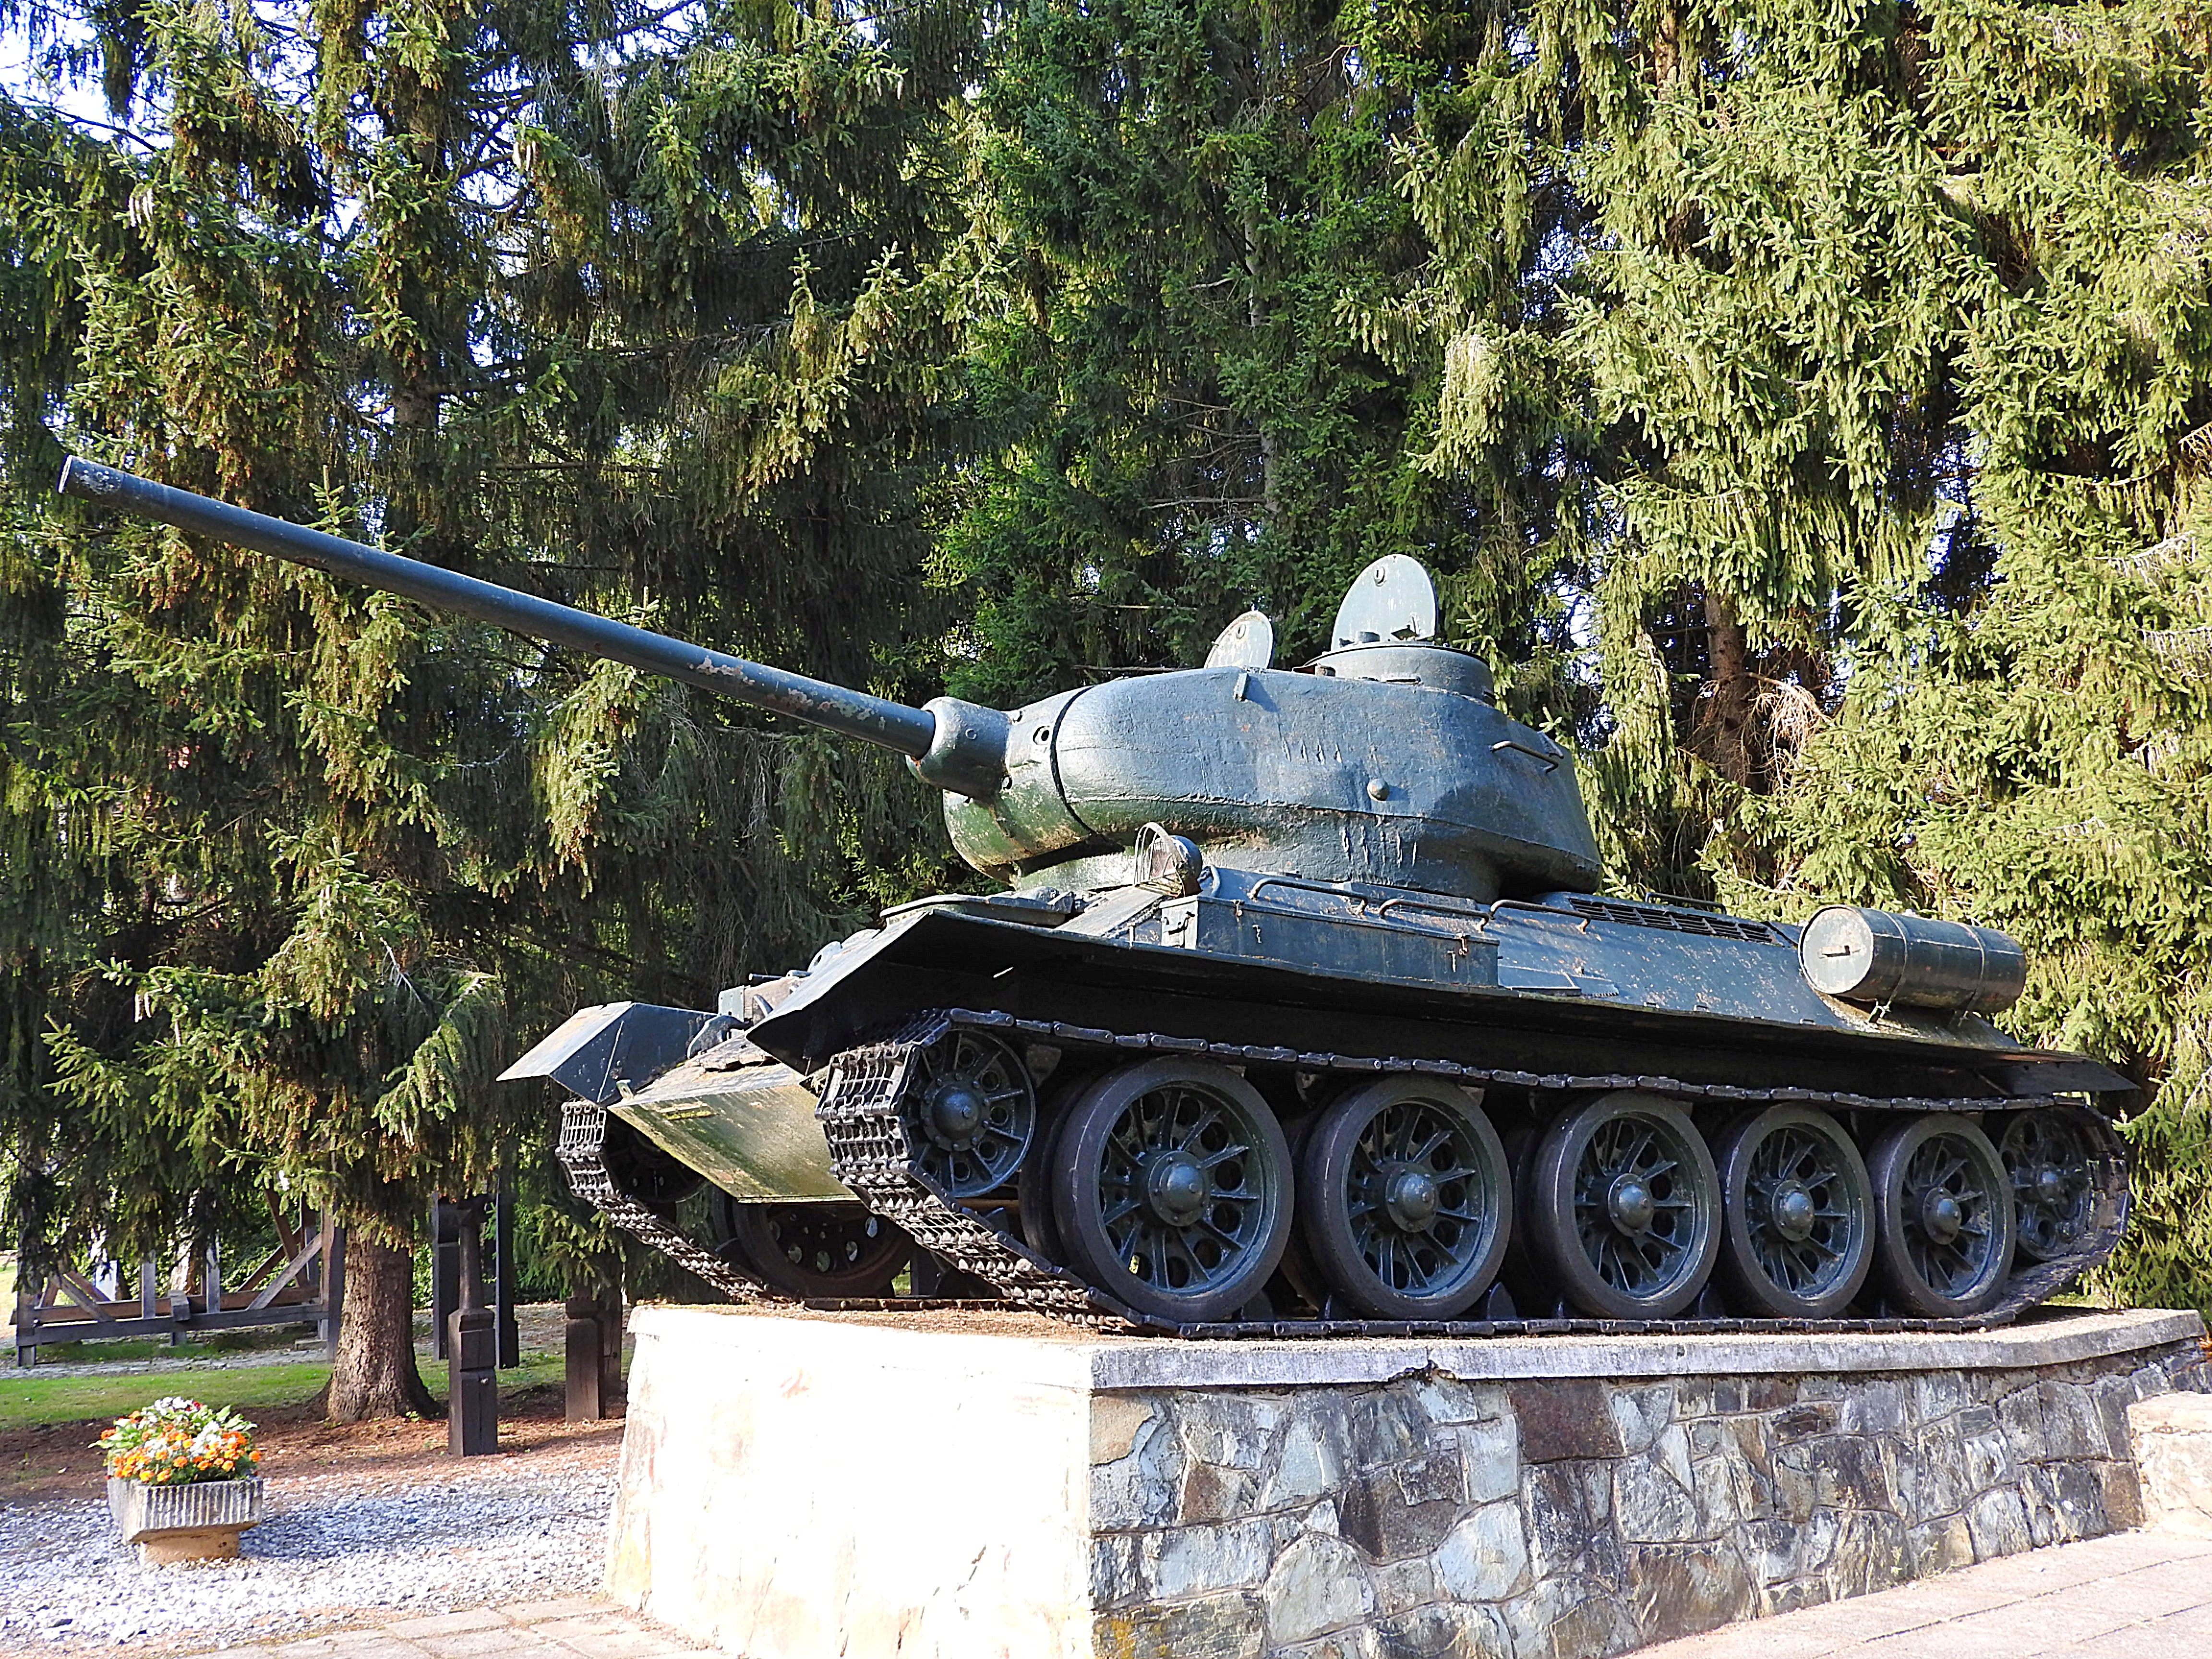 War Memorial, Panzer, Hungary, T-34, day, tree